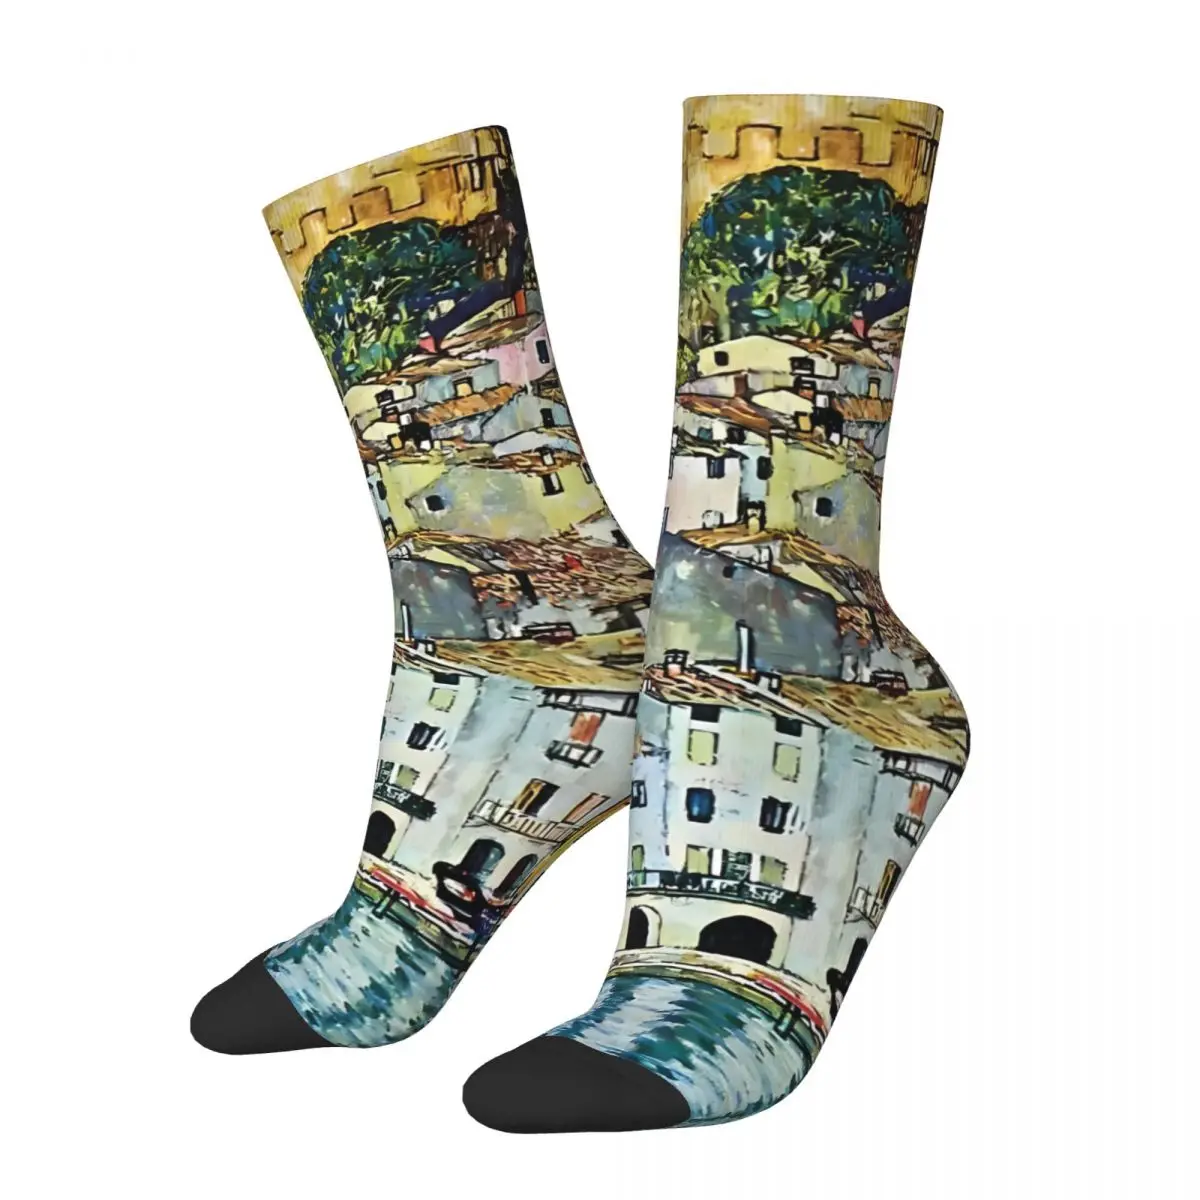 happy funny men's socks colorful city vintage harajuku gustav klimt patting art hip hop casual crew sock gift pattern printed